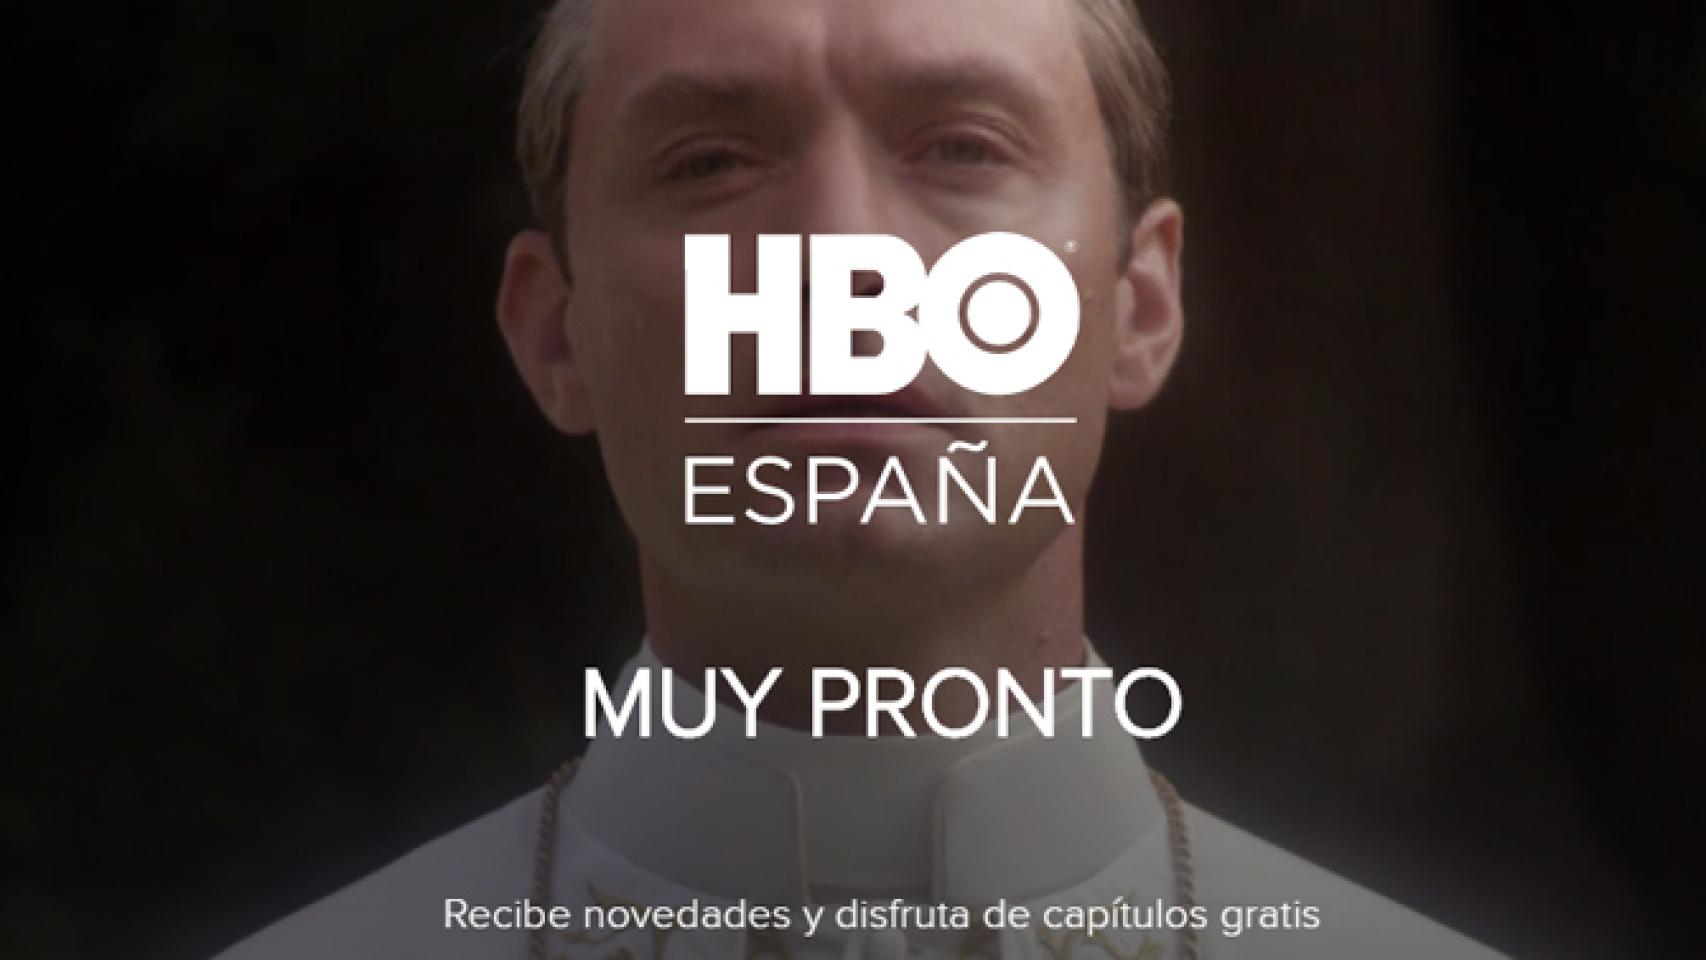 HBO España da a probar su servicio con capítulos gratis